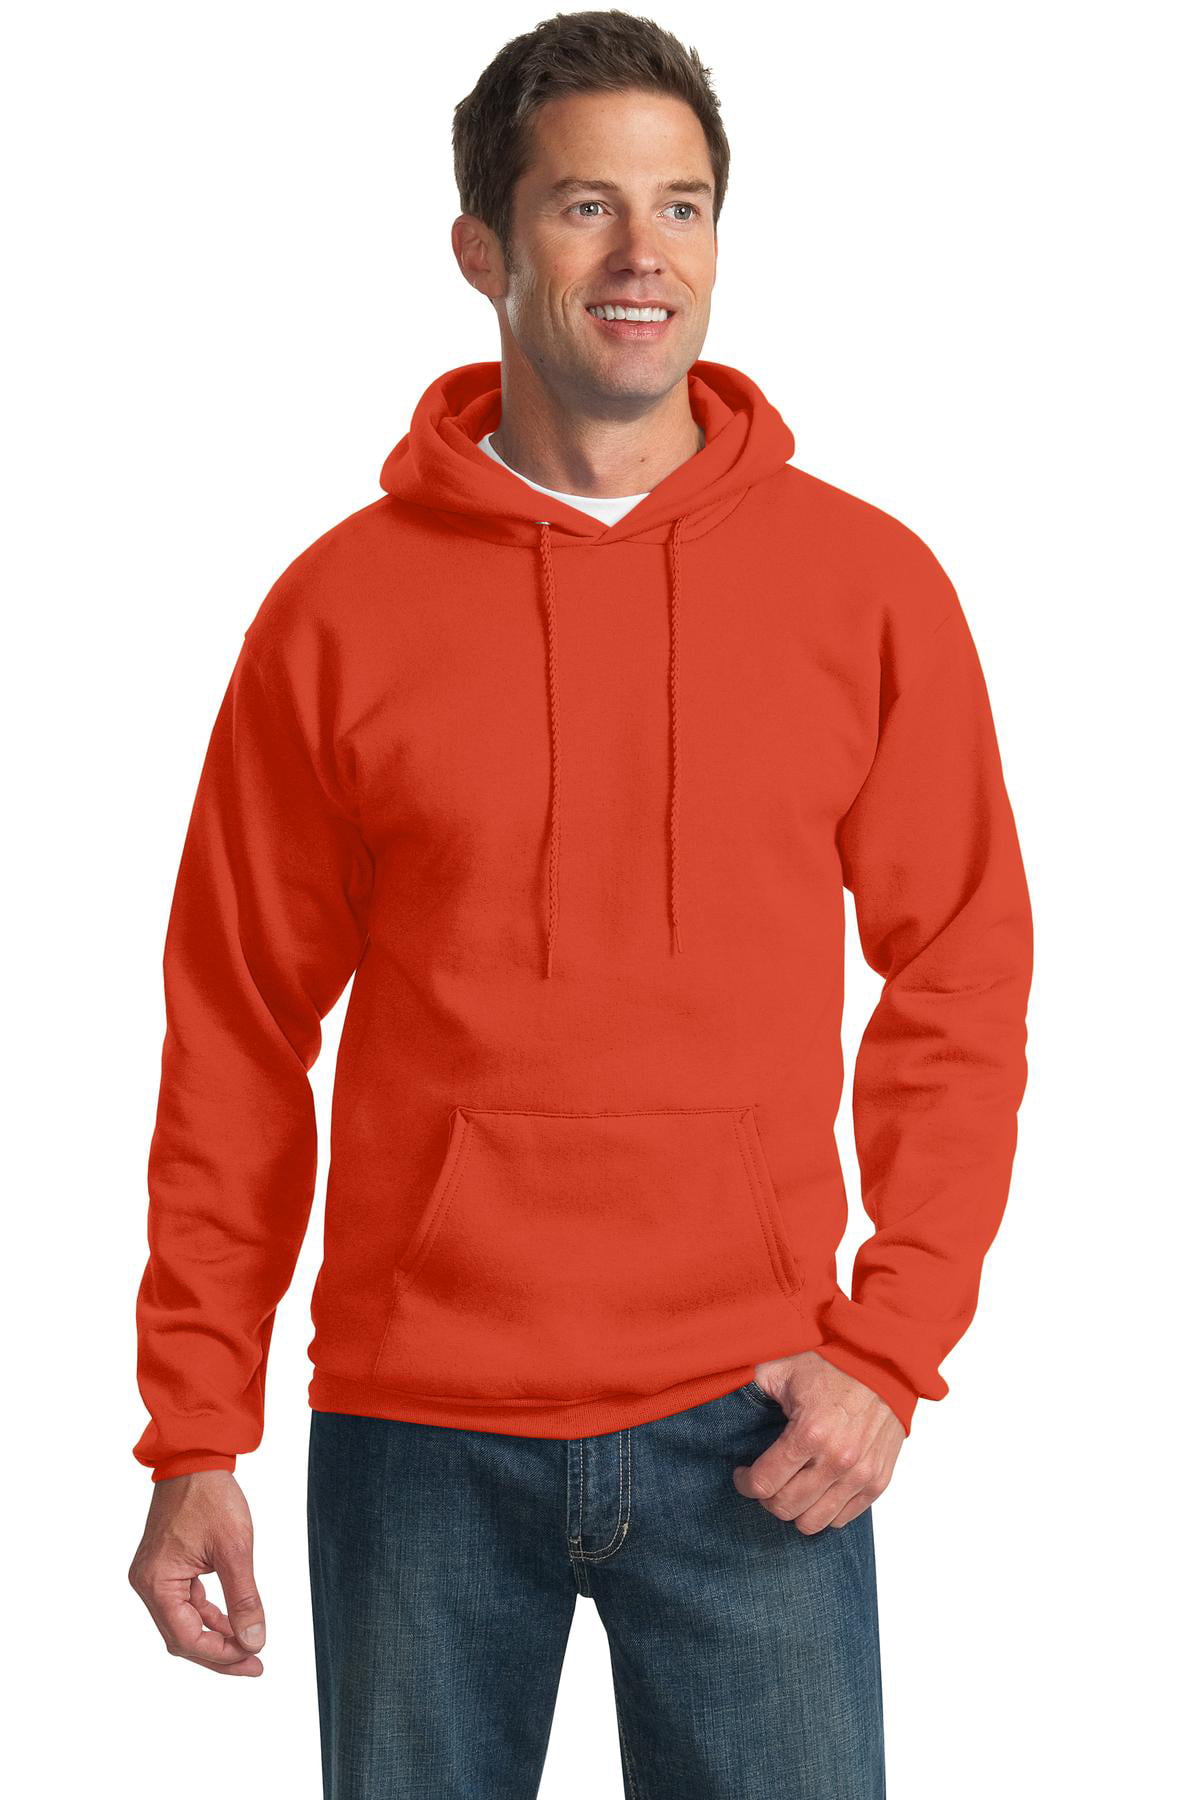 Port & Company Mens Ultimate Pullover Hooded Sweatshirt 